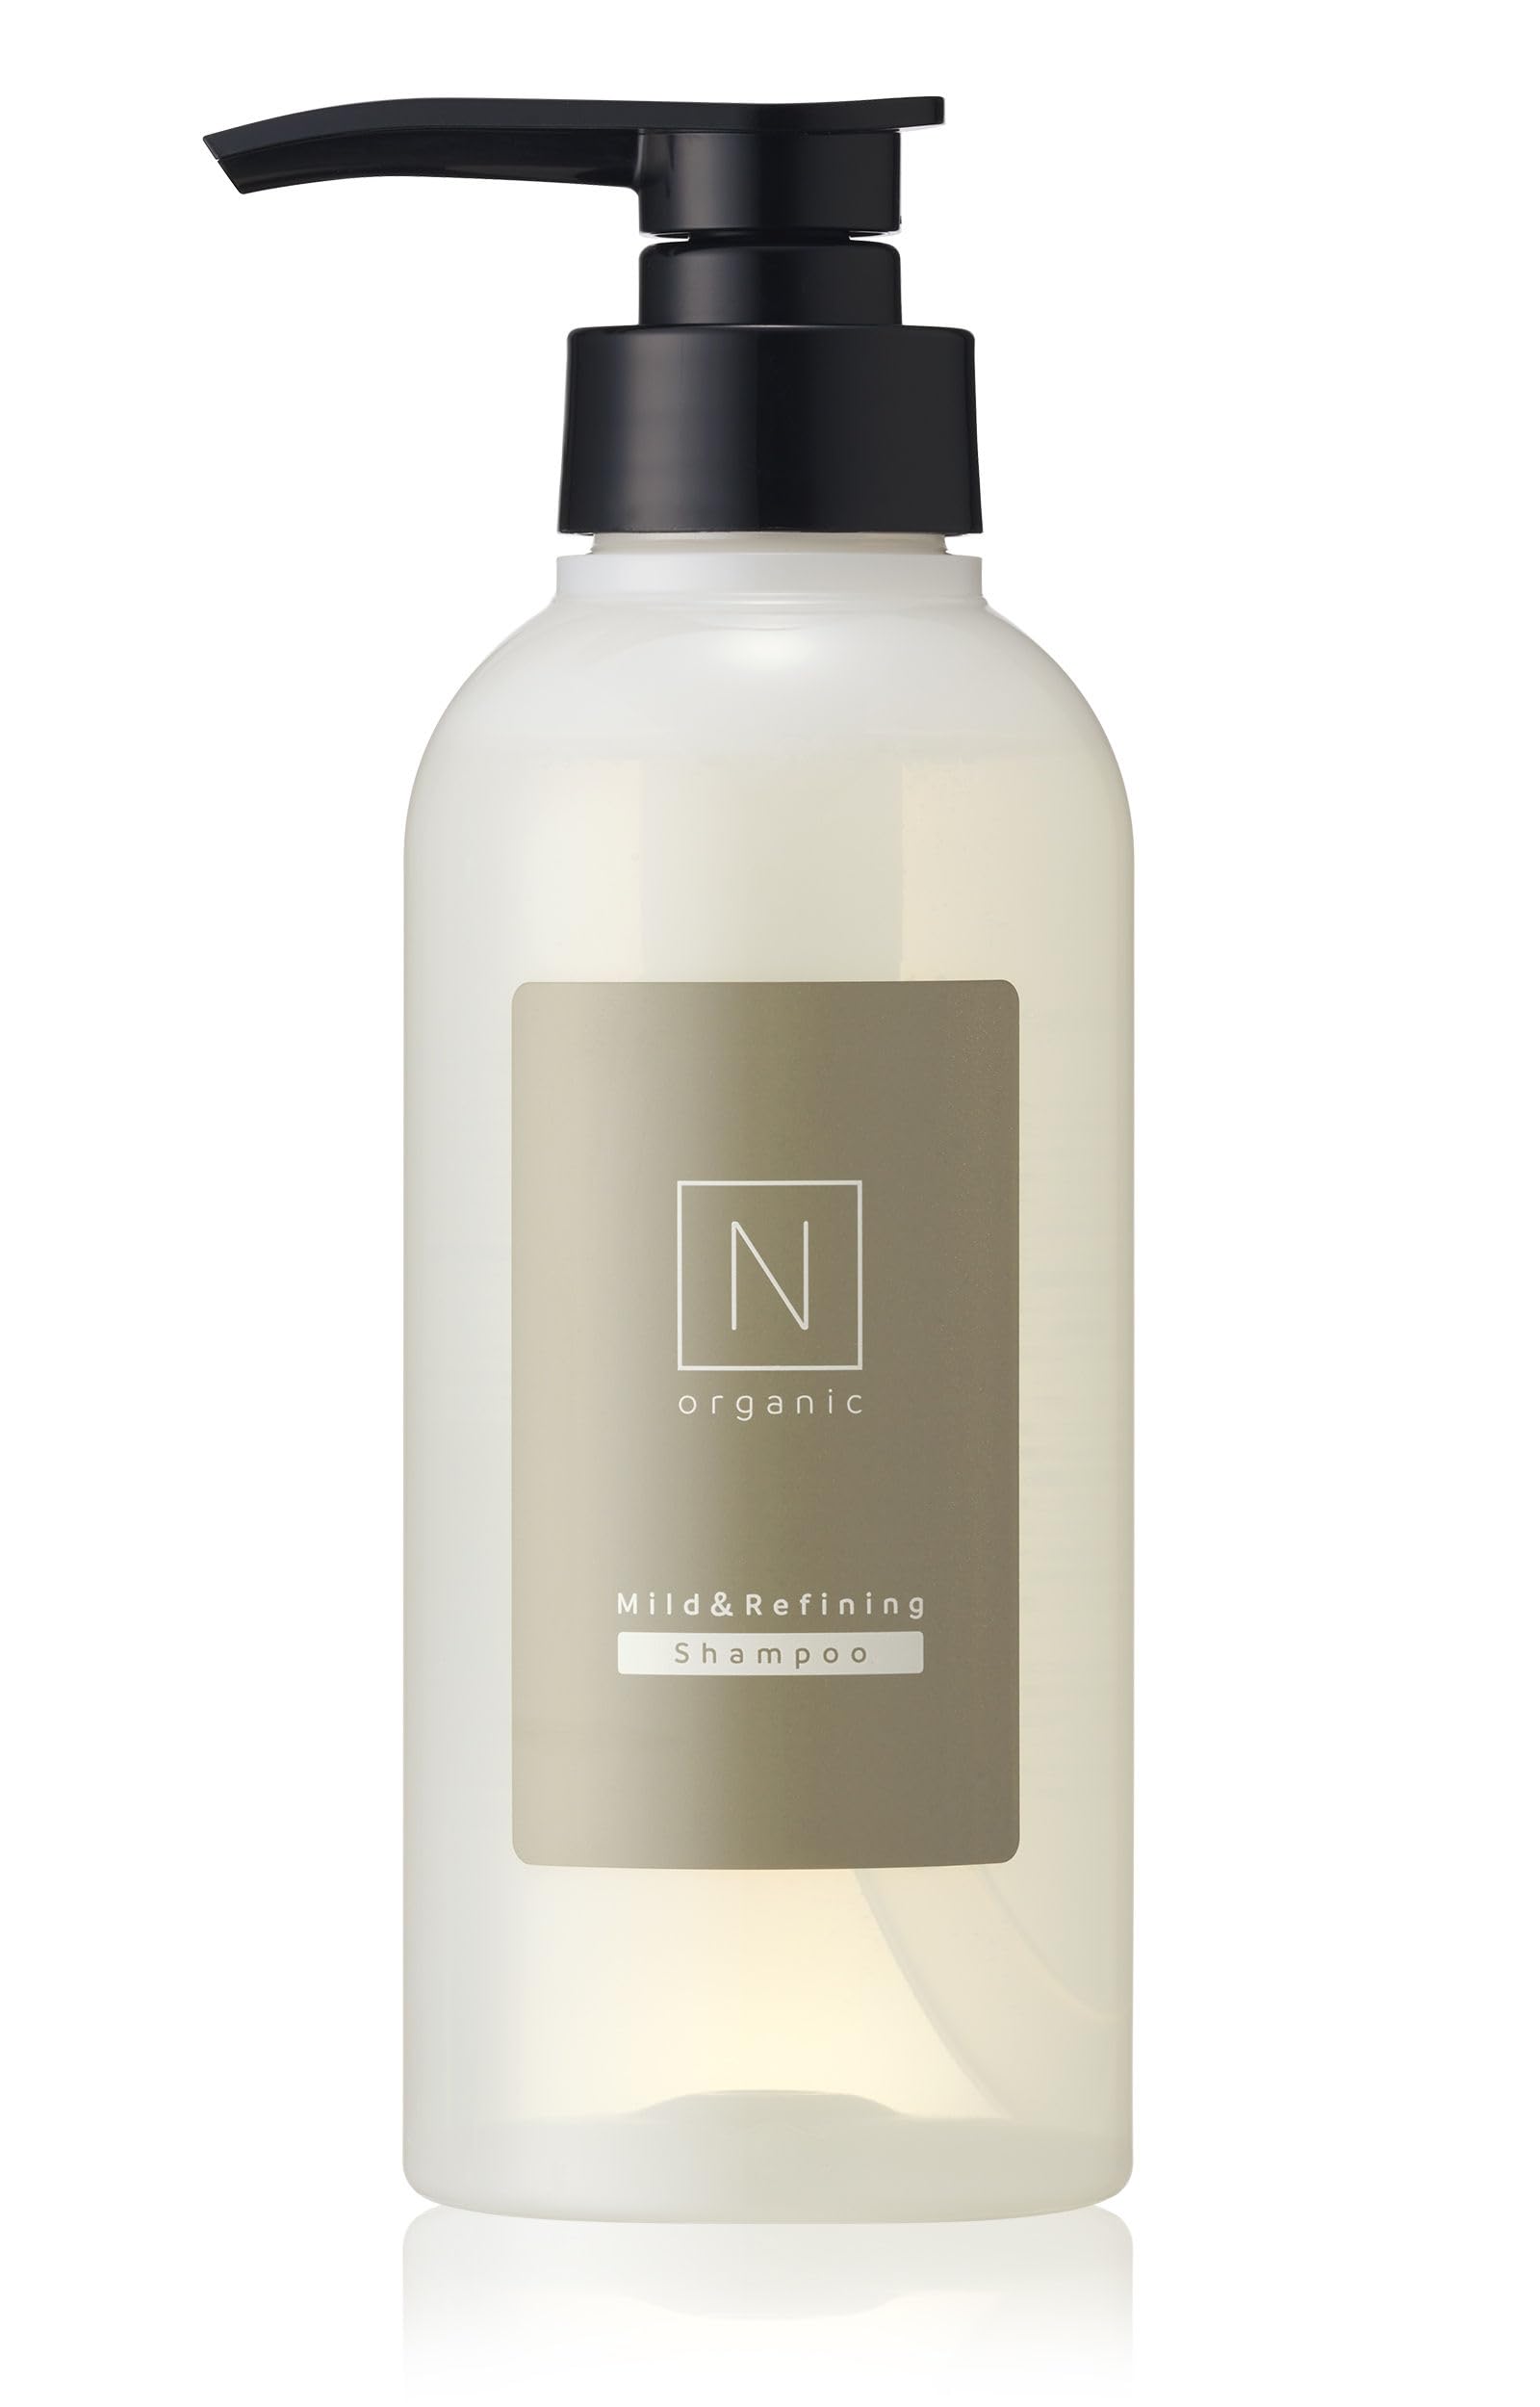 N Organic Mild & Refining Shampoo 300Ml From Japan